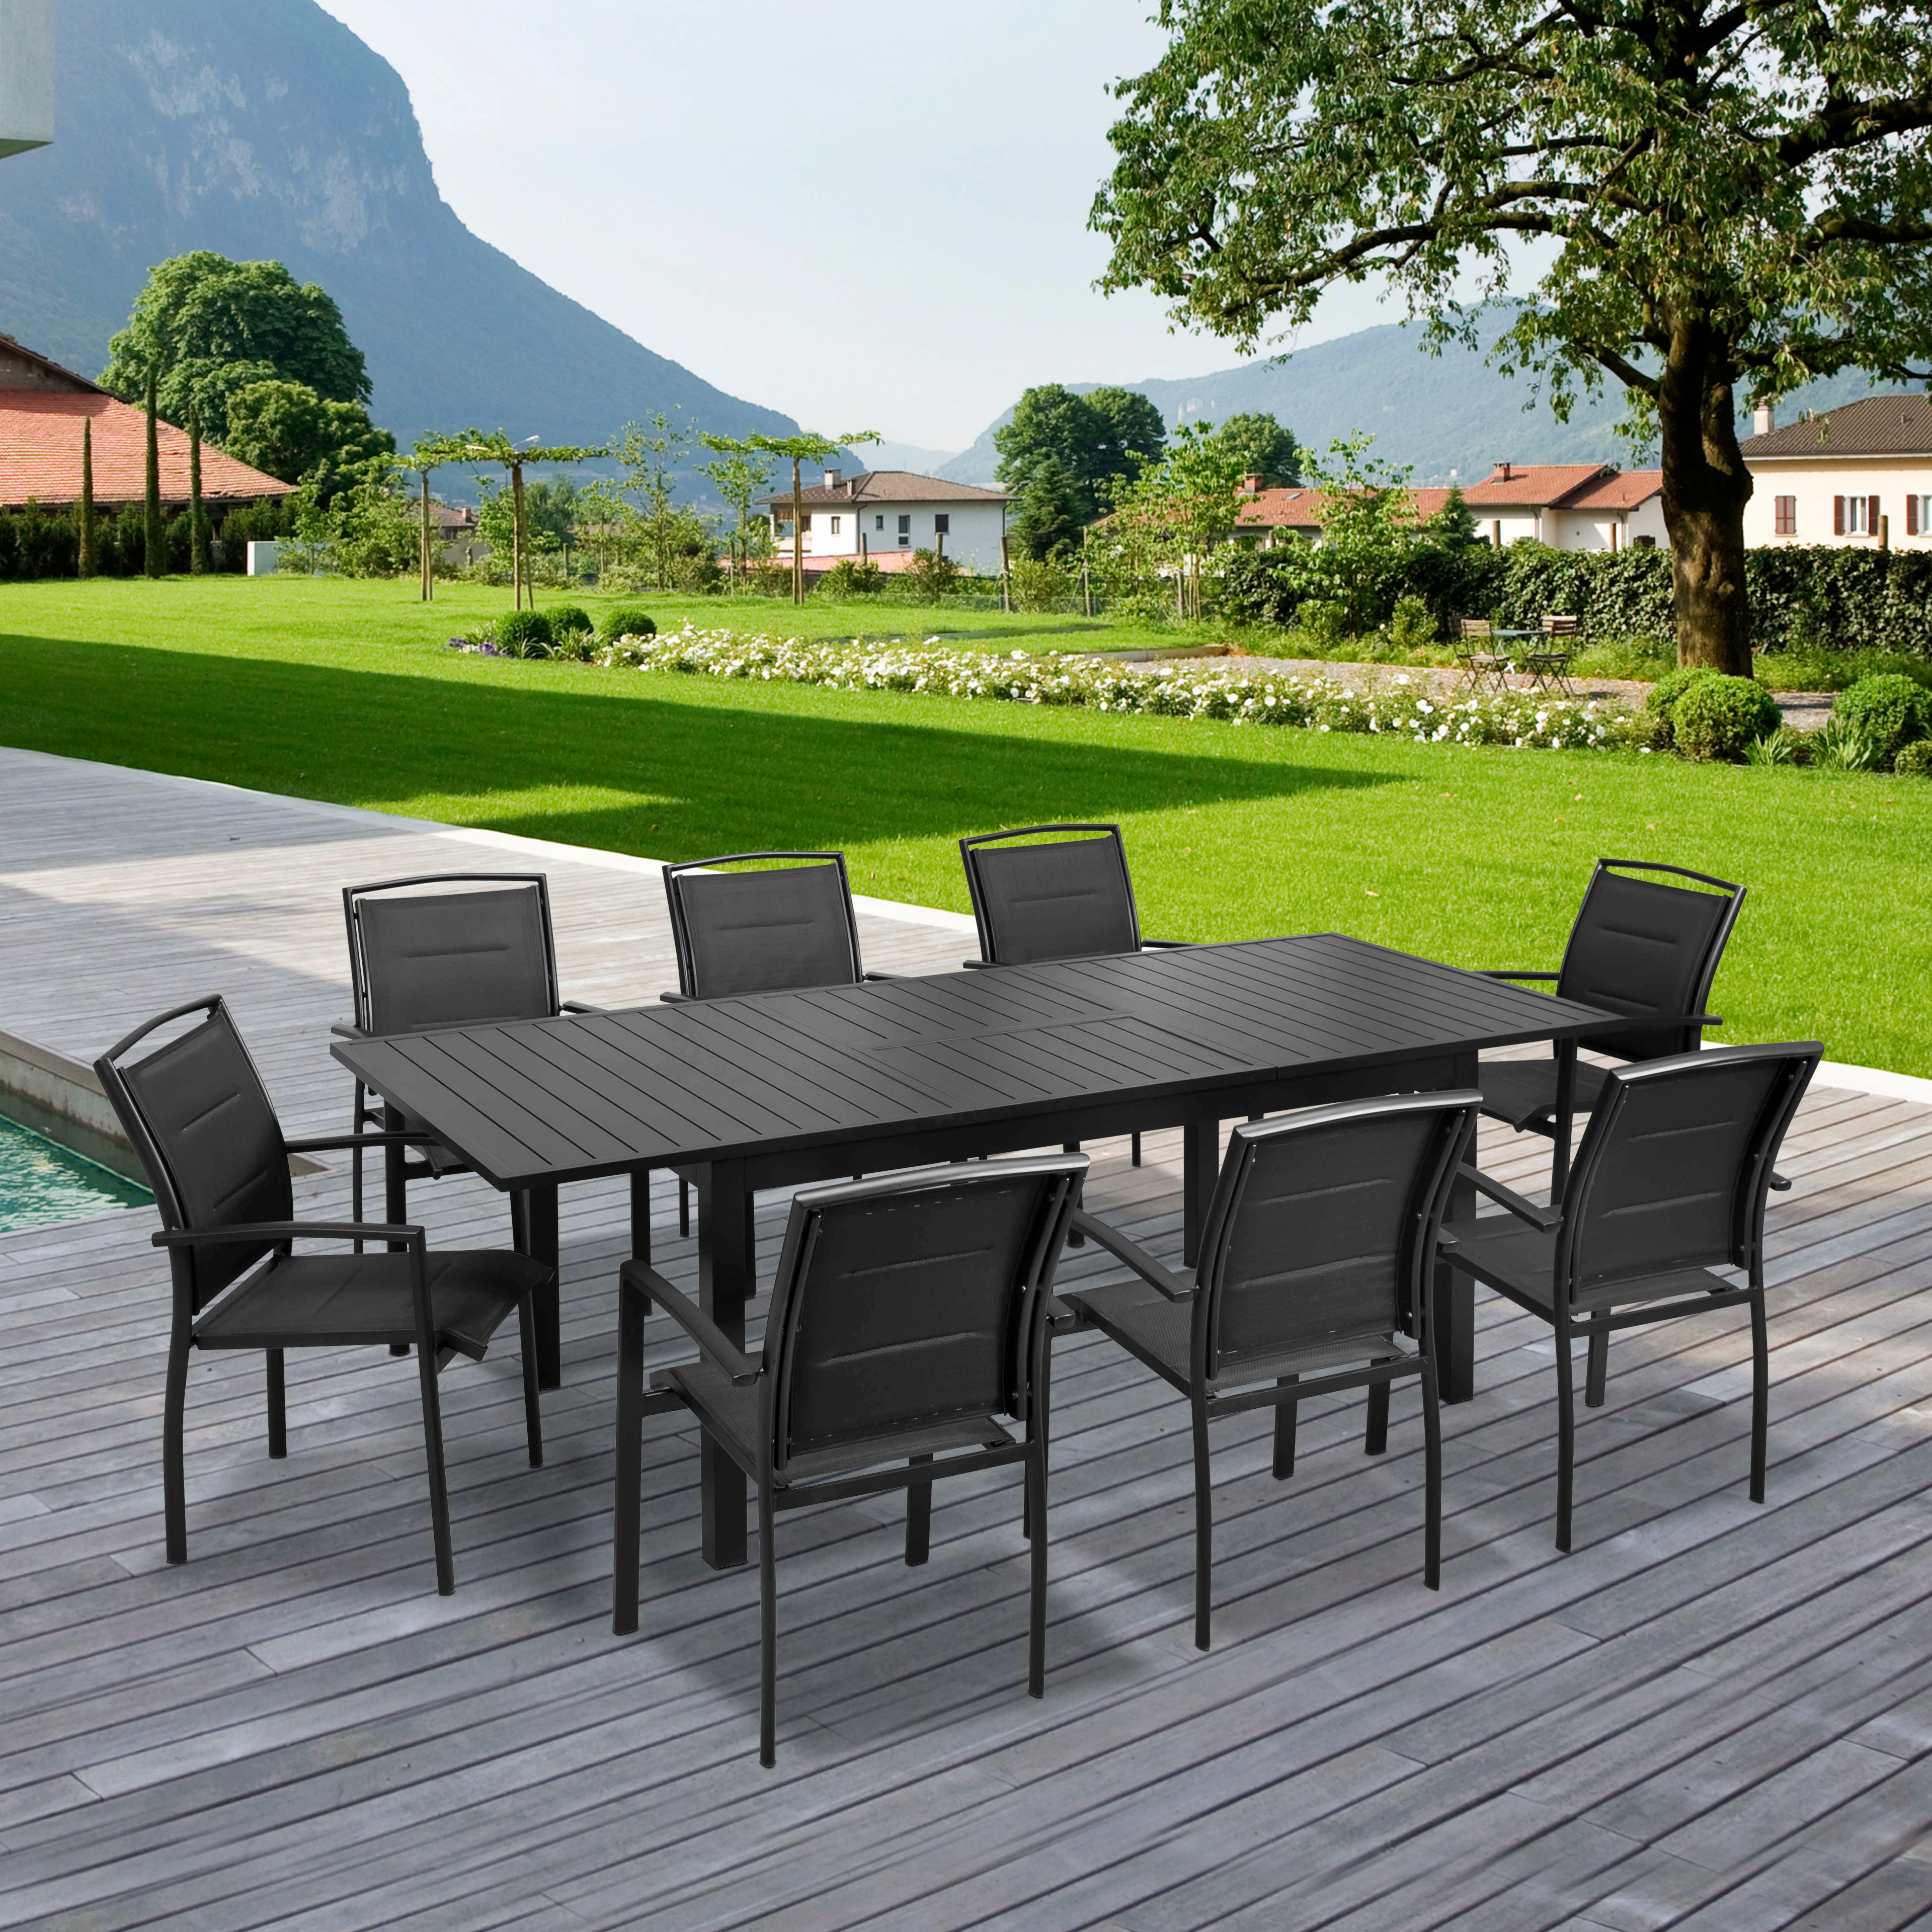 Green 6 Places Rectangulaire patio jardin table chaises meubles cover